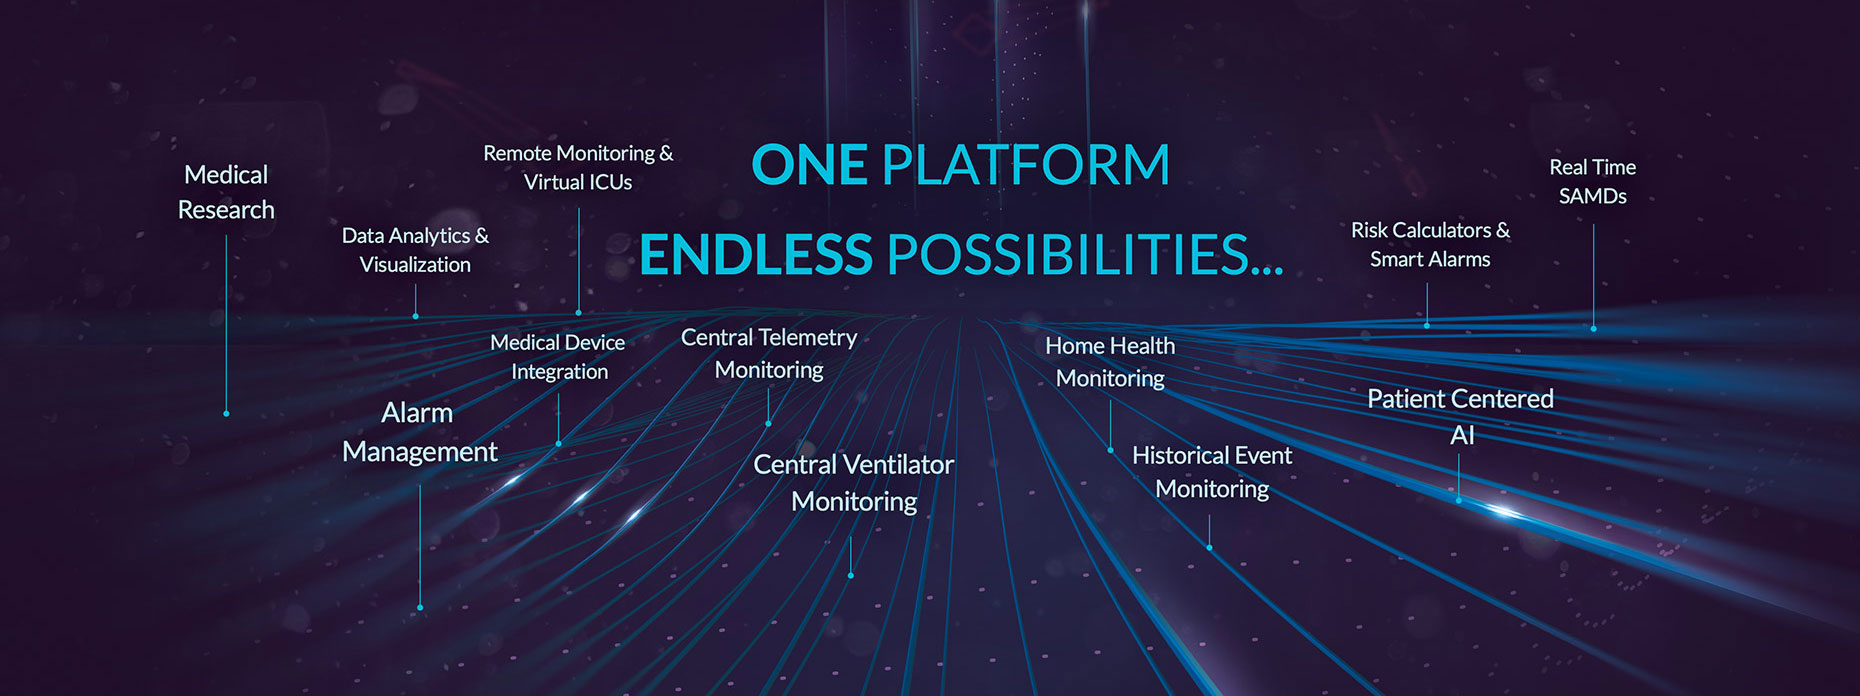 One Platform, Endless Possibilities Diagram